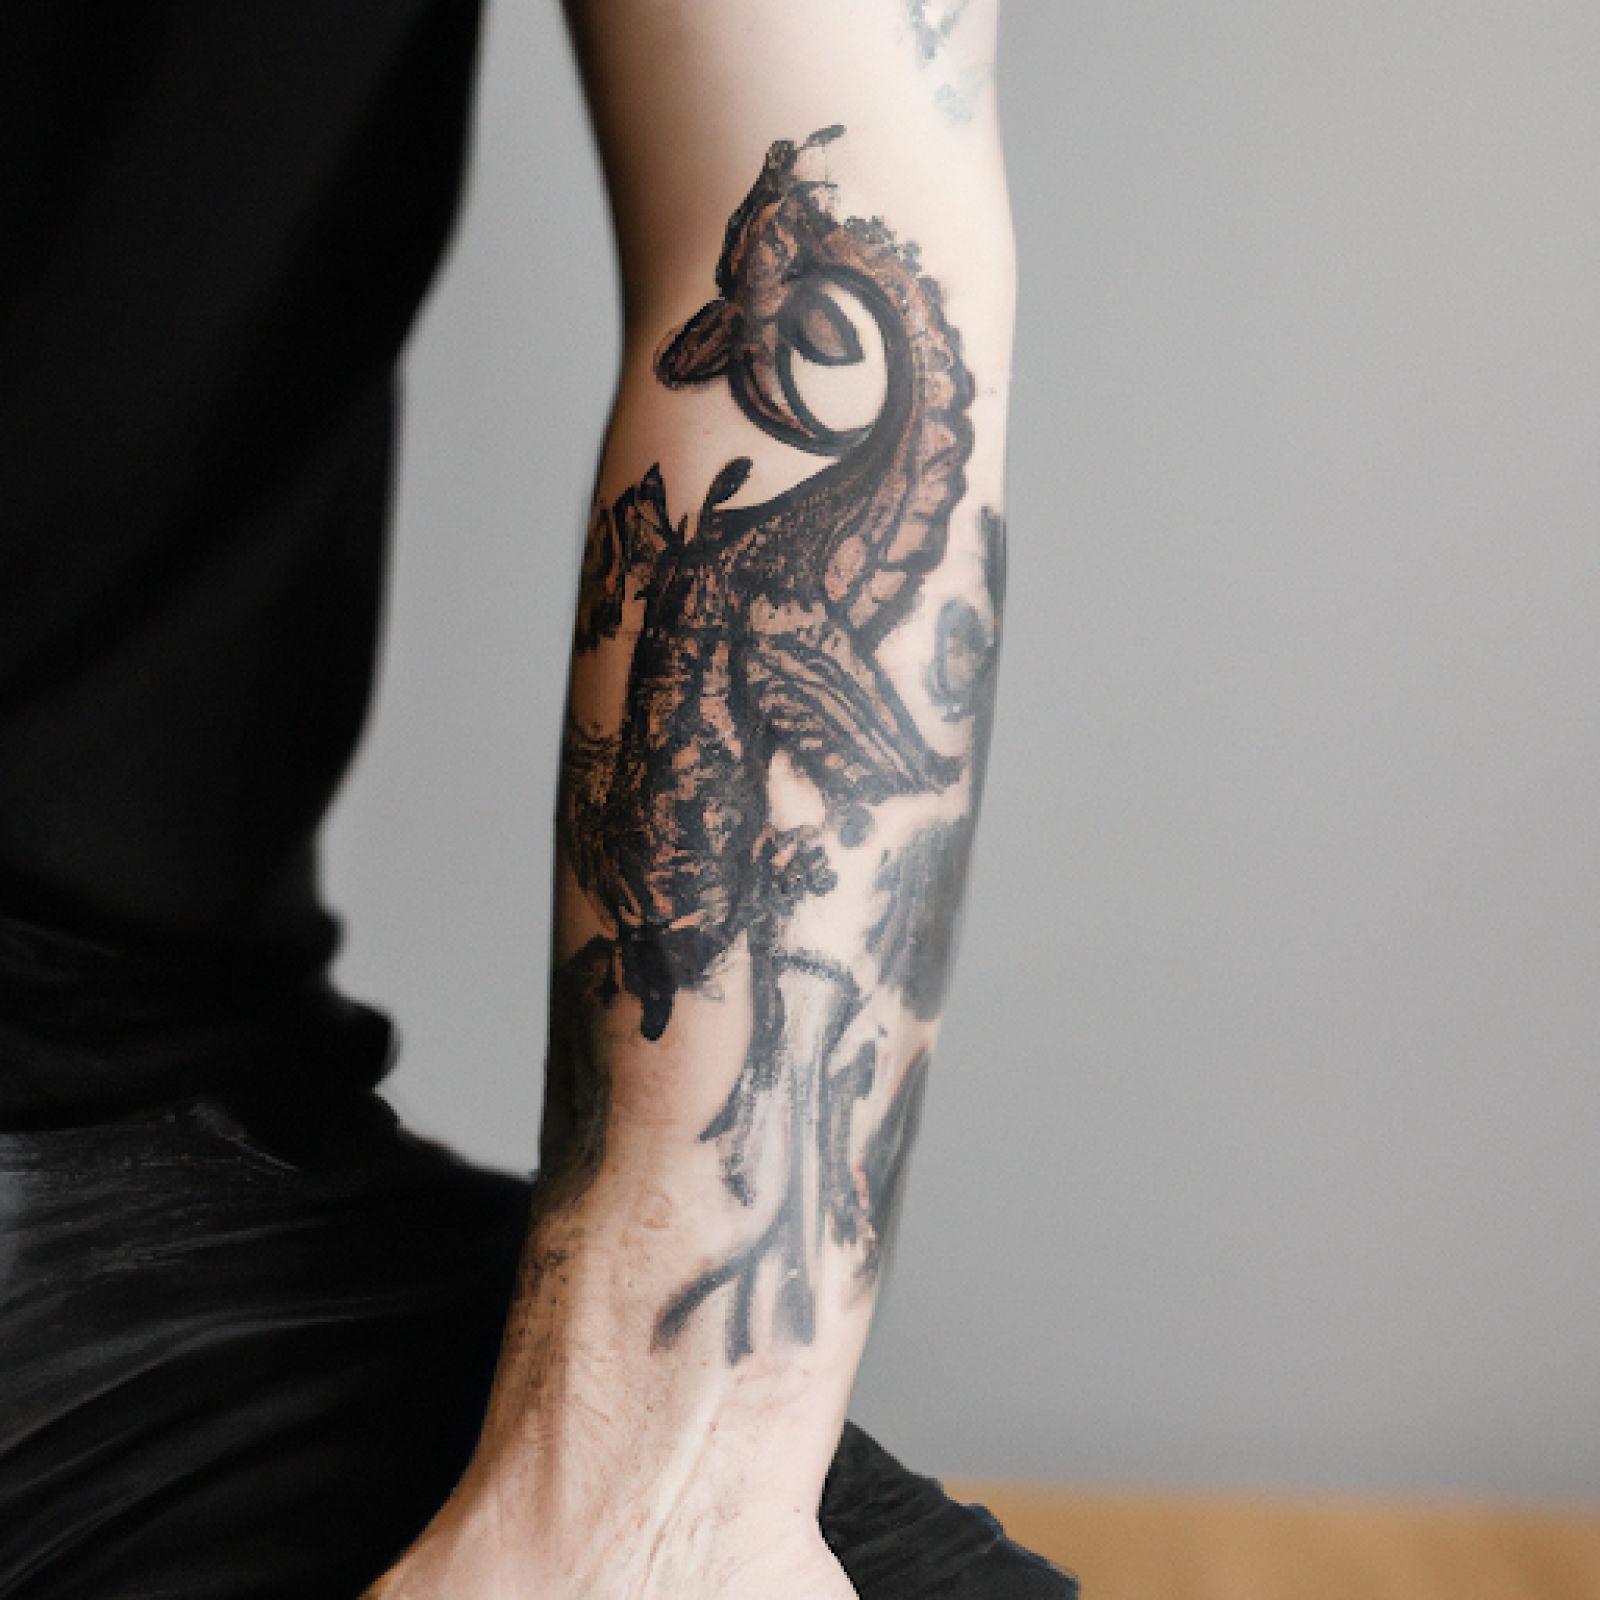 Dragon tattoo on arm for men